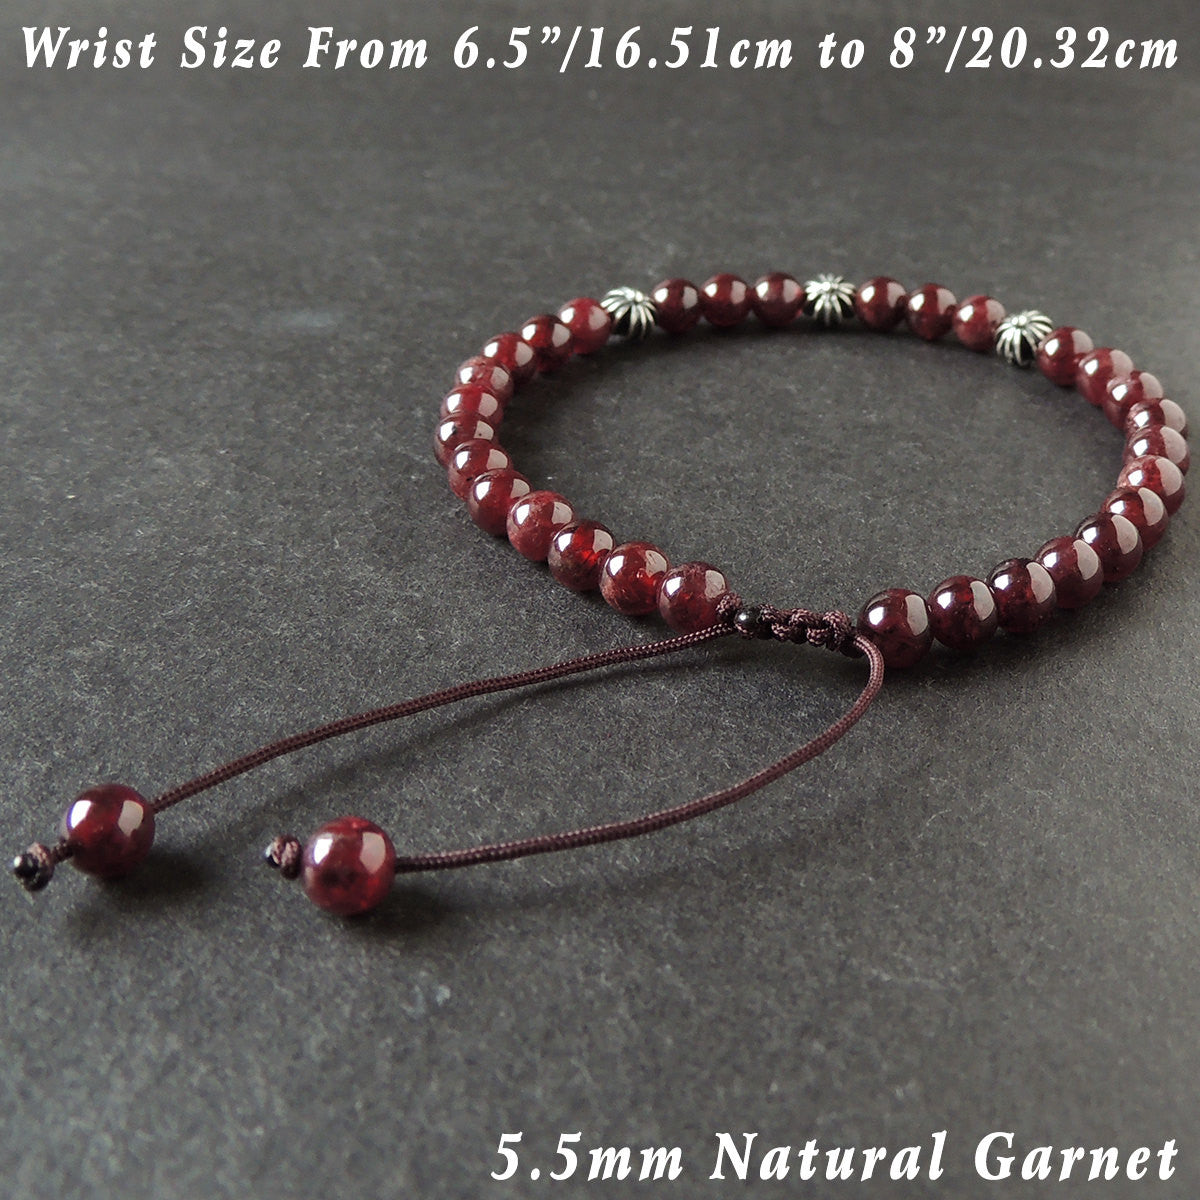 5.5mm Grade AAA Garnet Adjustable Braided Gemstone Bracelet with S925 Sterling Silver Small Cross Beads - Handmade by Gem & Silver BR1022